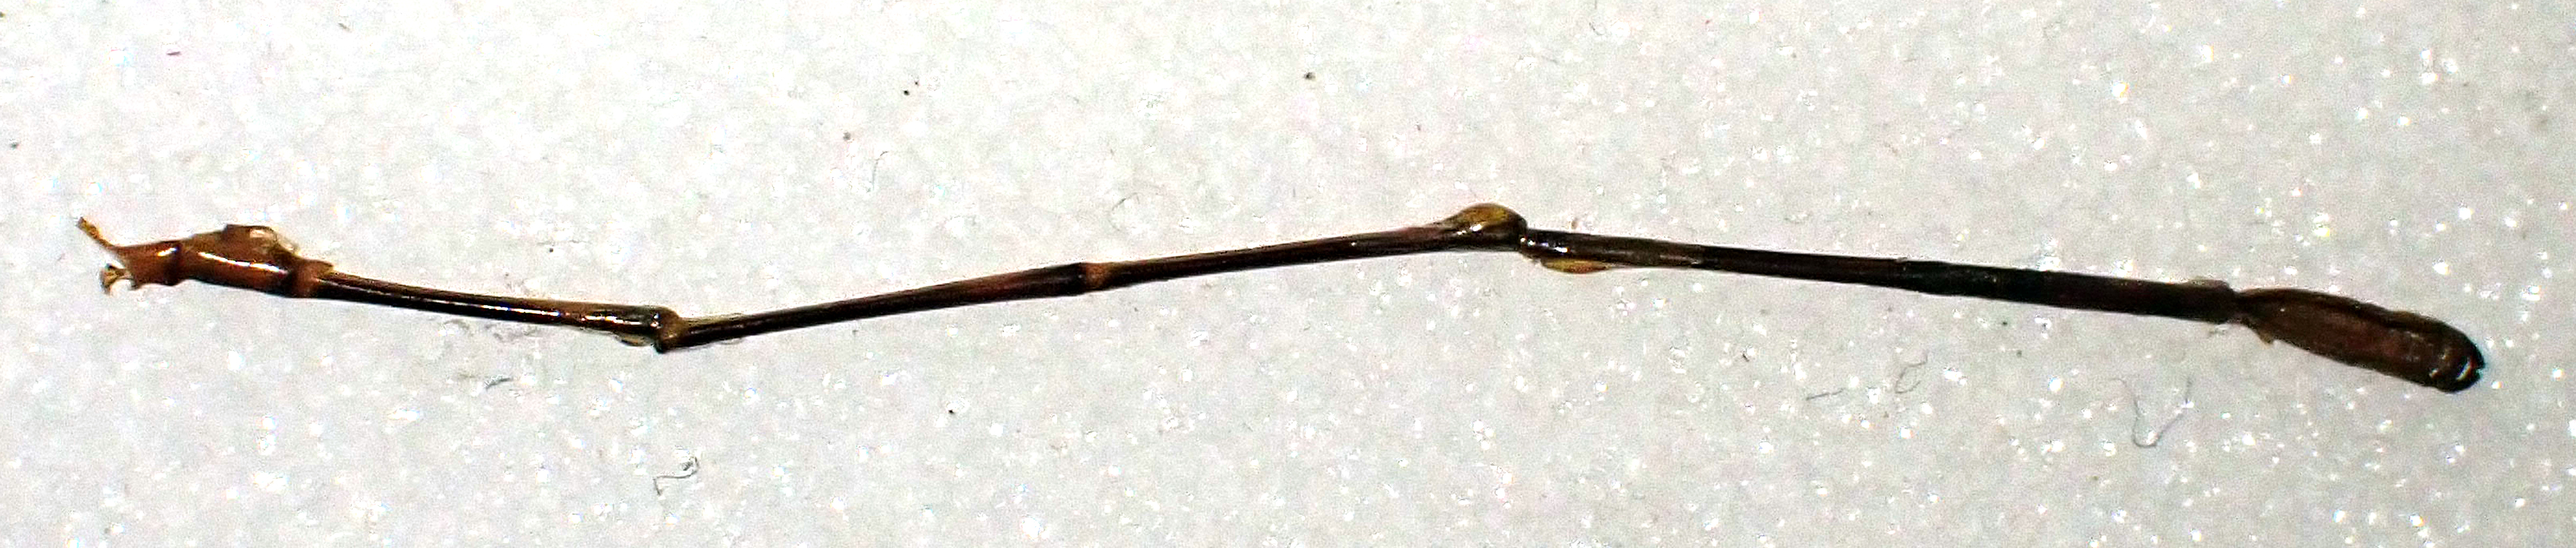 Psaironeura tenuissima lt abdomen